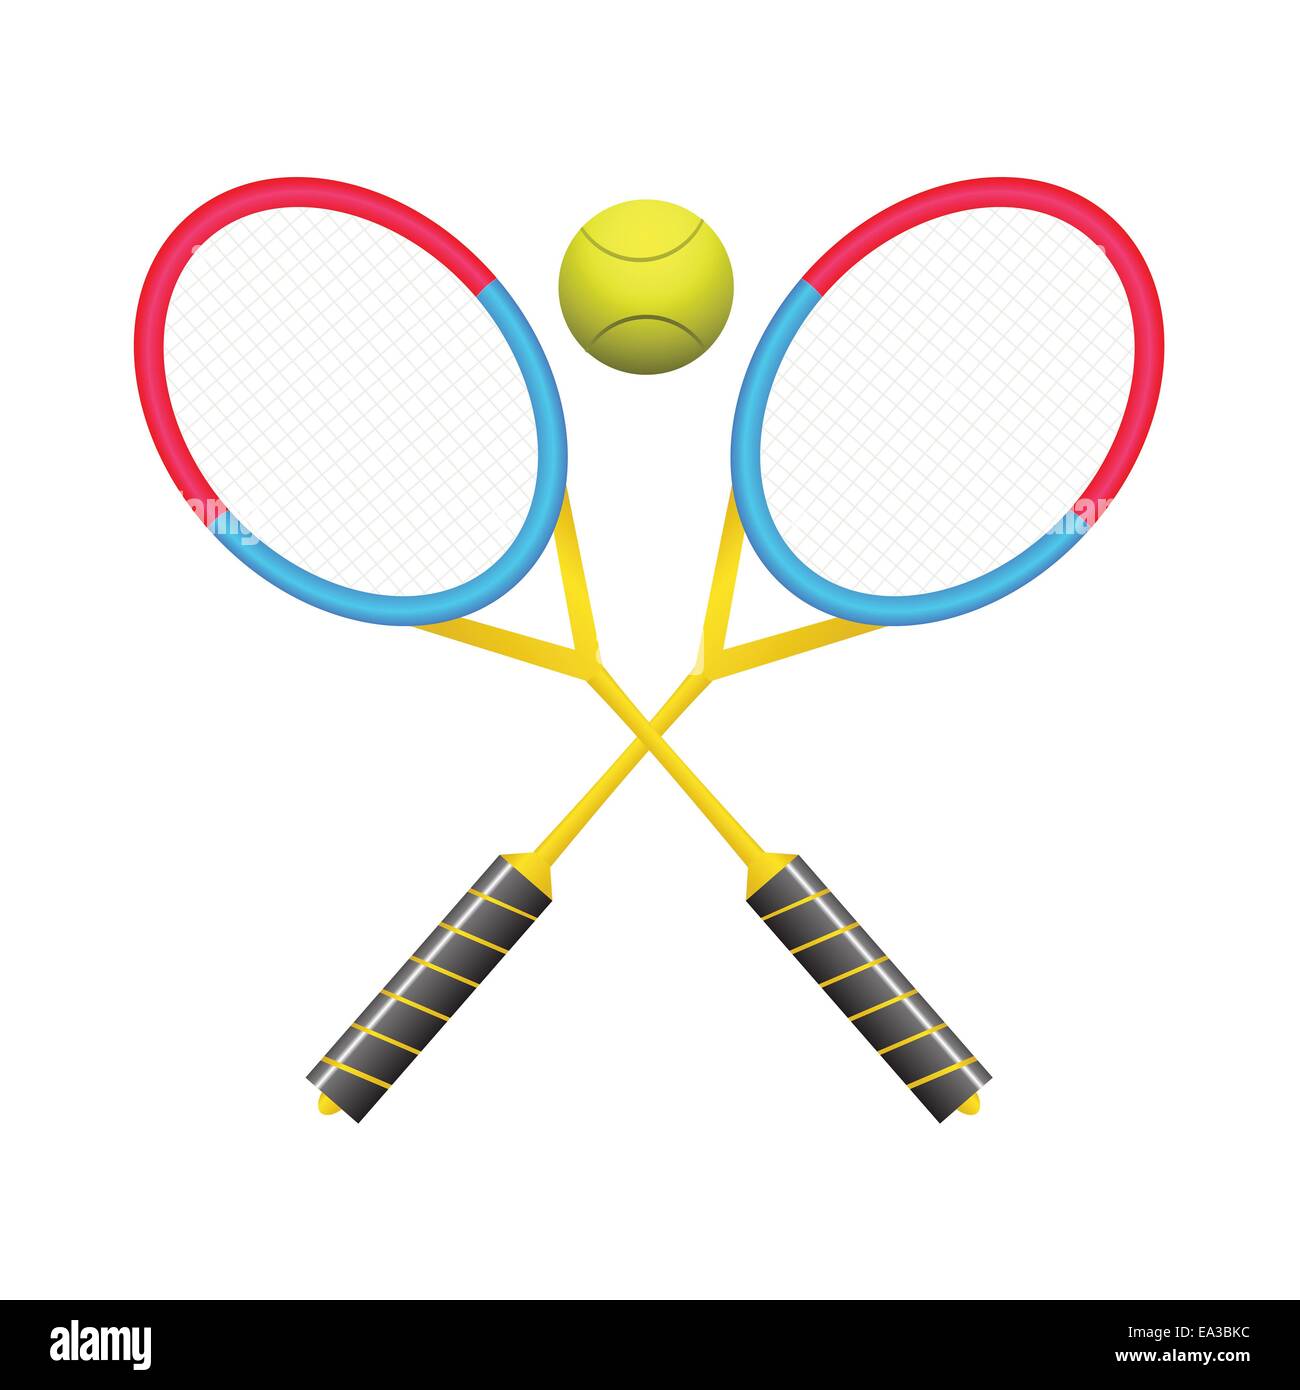 tennis rackets Stock Photo